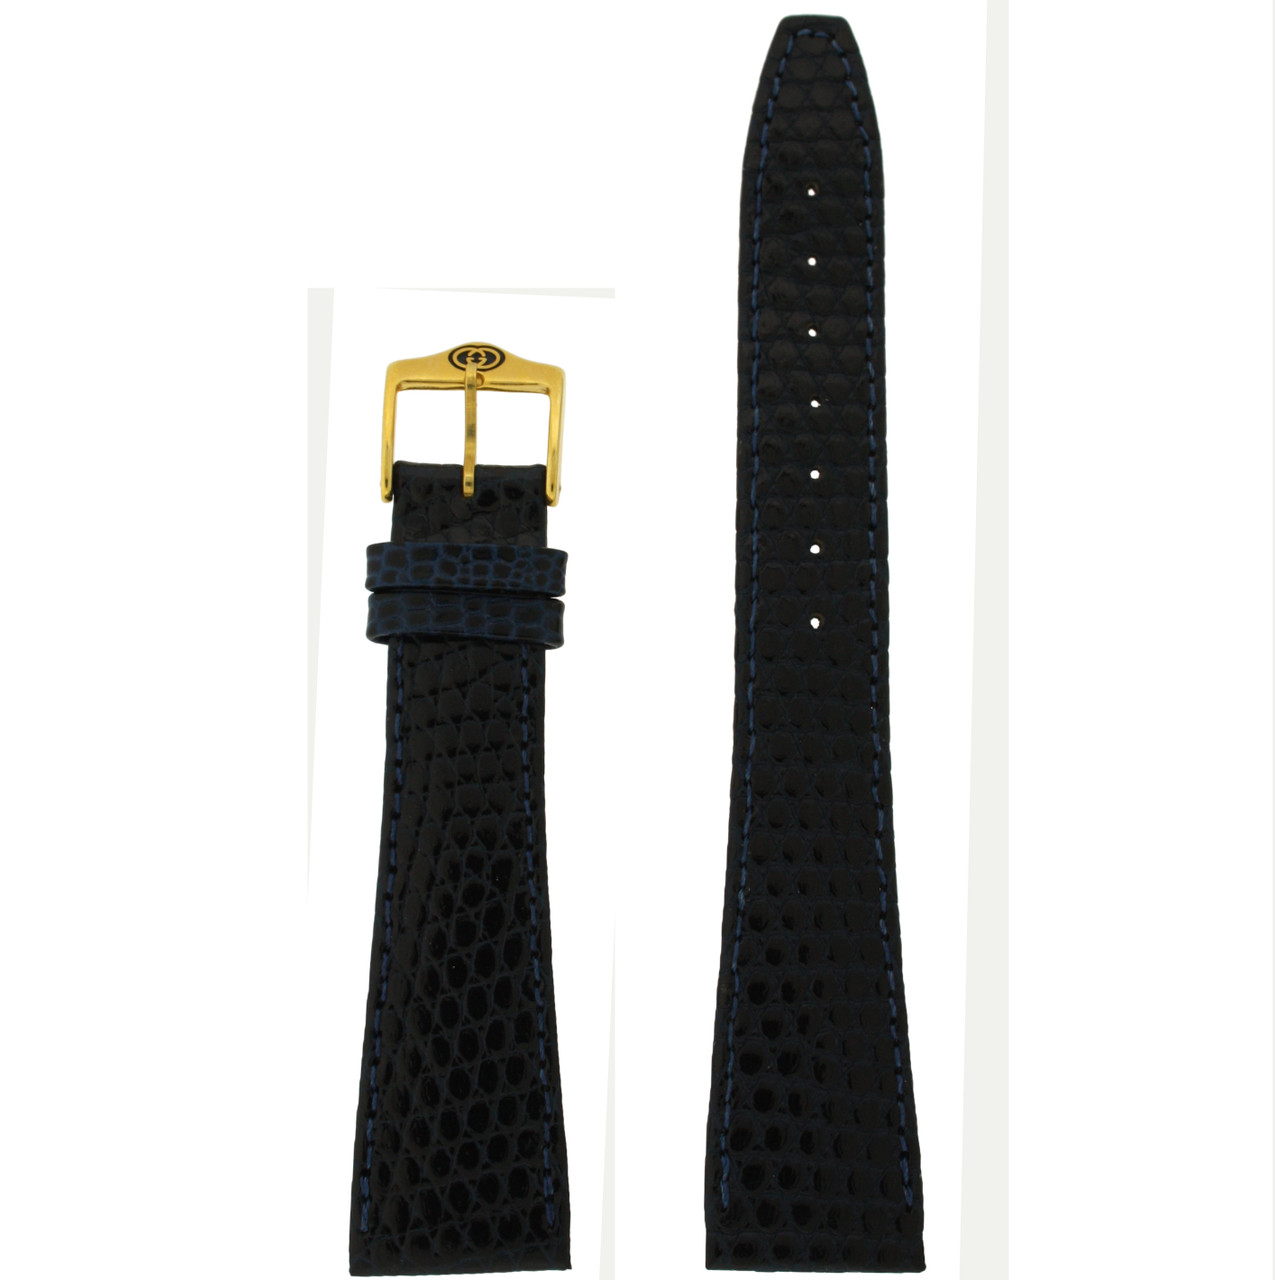 Gucci Watch Band Black Lizard Leather 17mm Strap fits 2200M 3000M 7600M